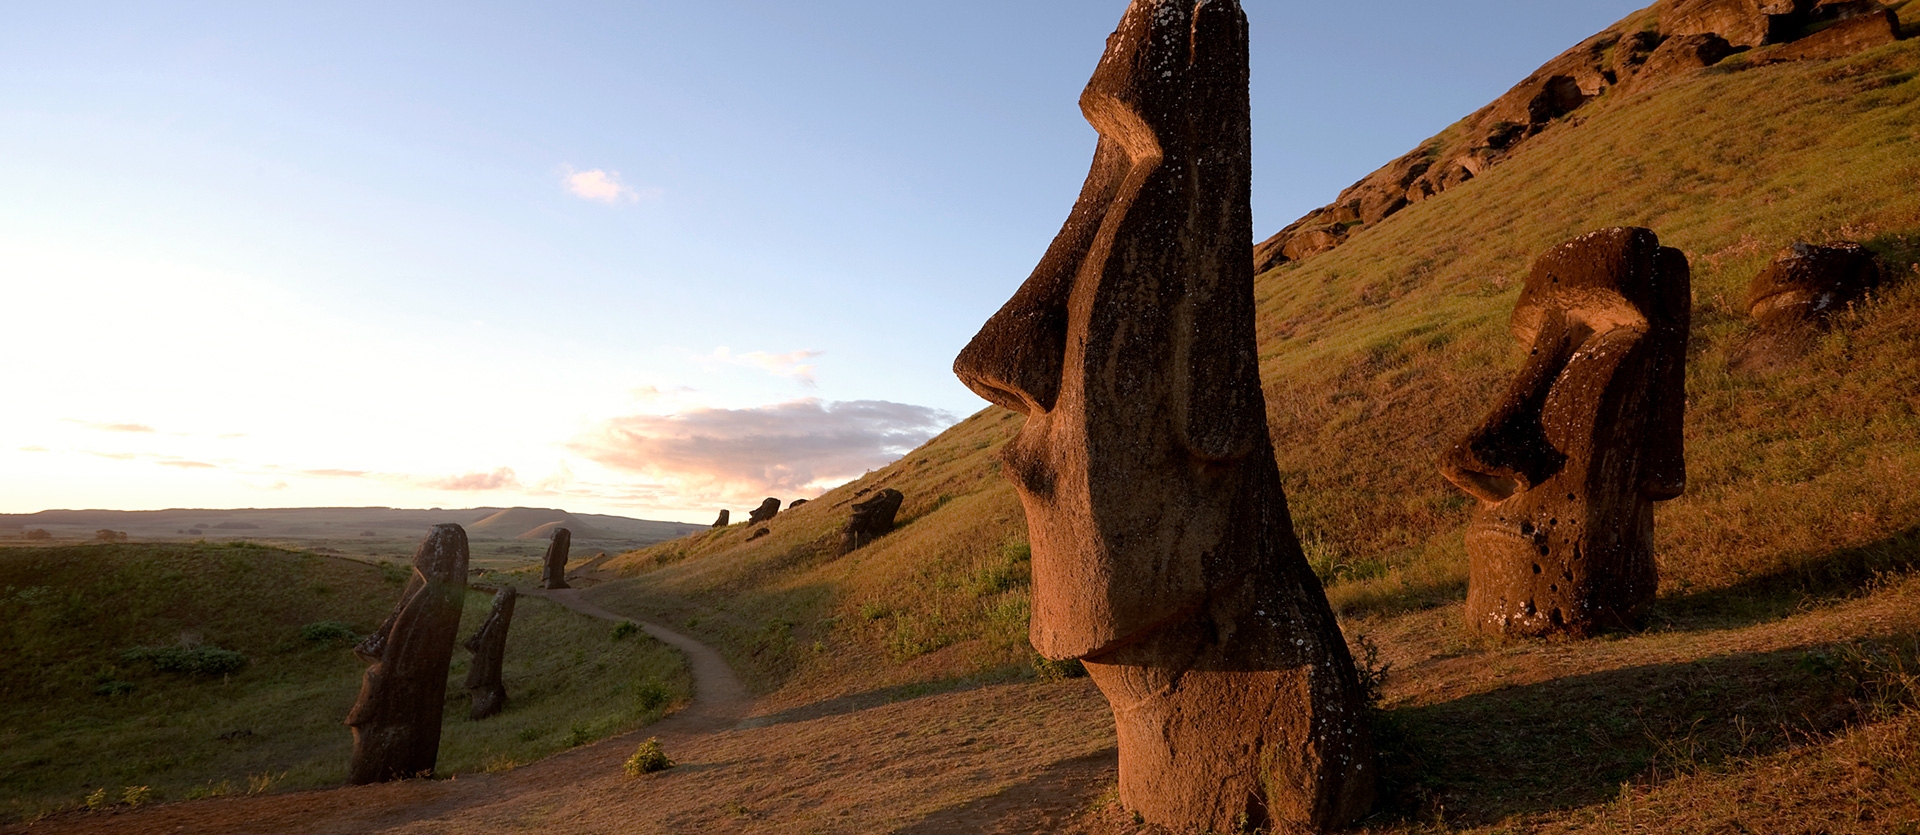 Moai Statues on Easter Island NBH-009 NANOBLOCK | Sights to See